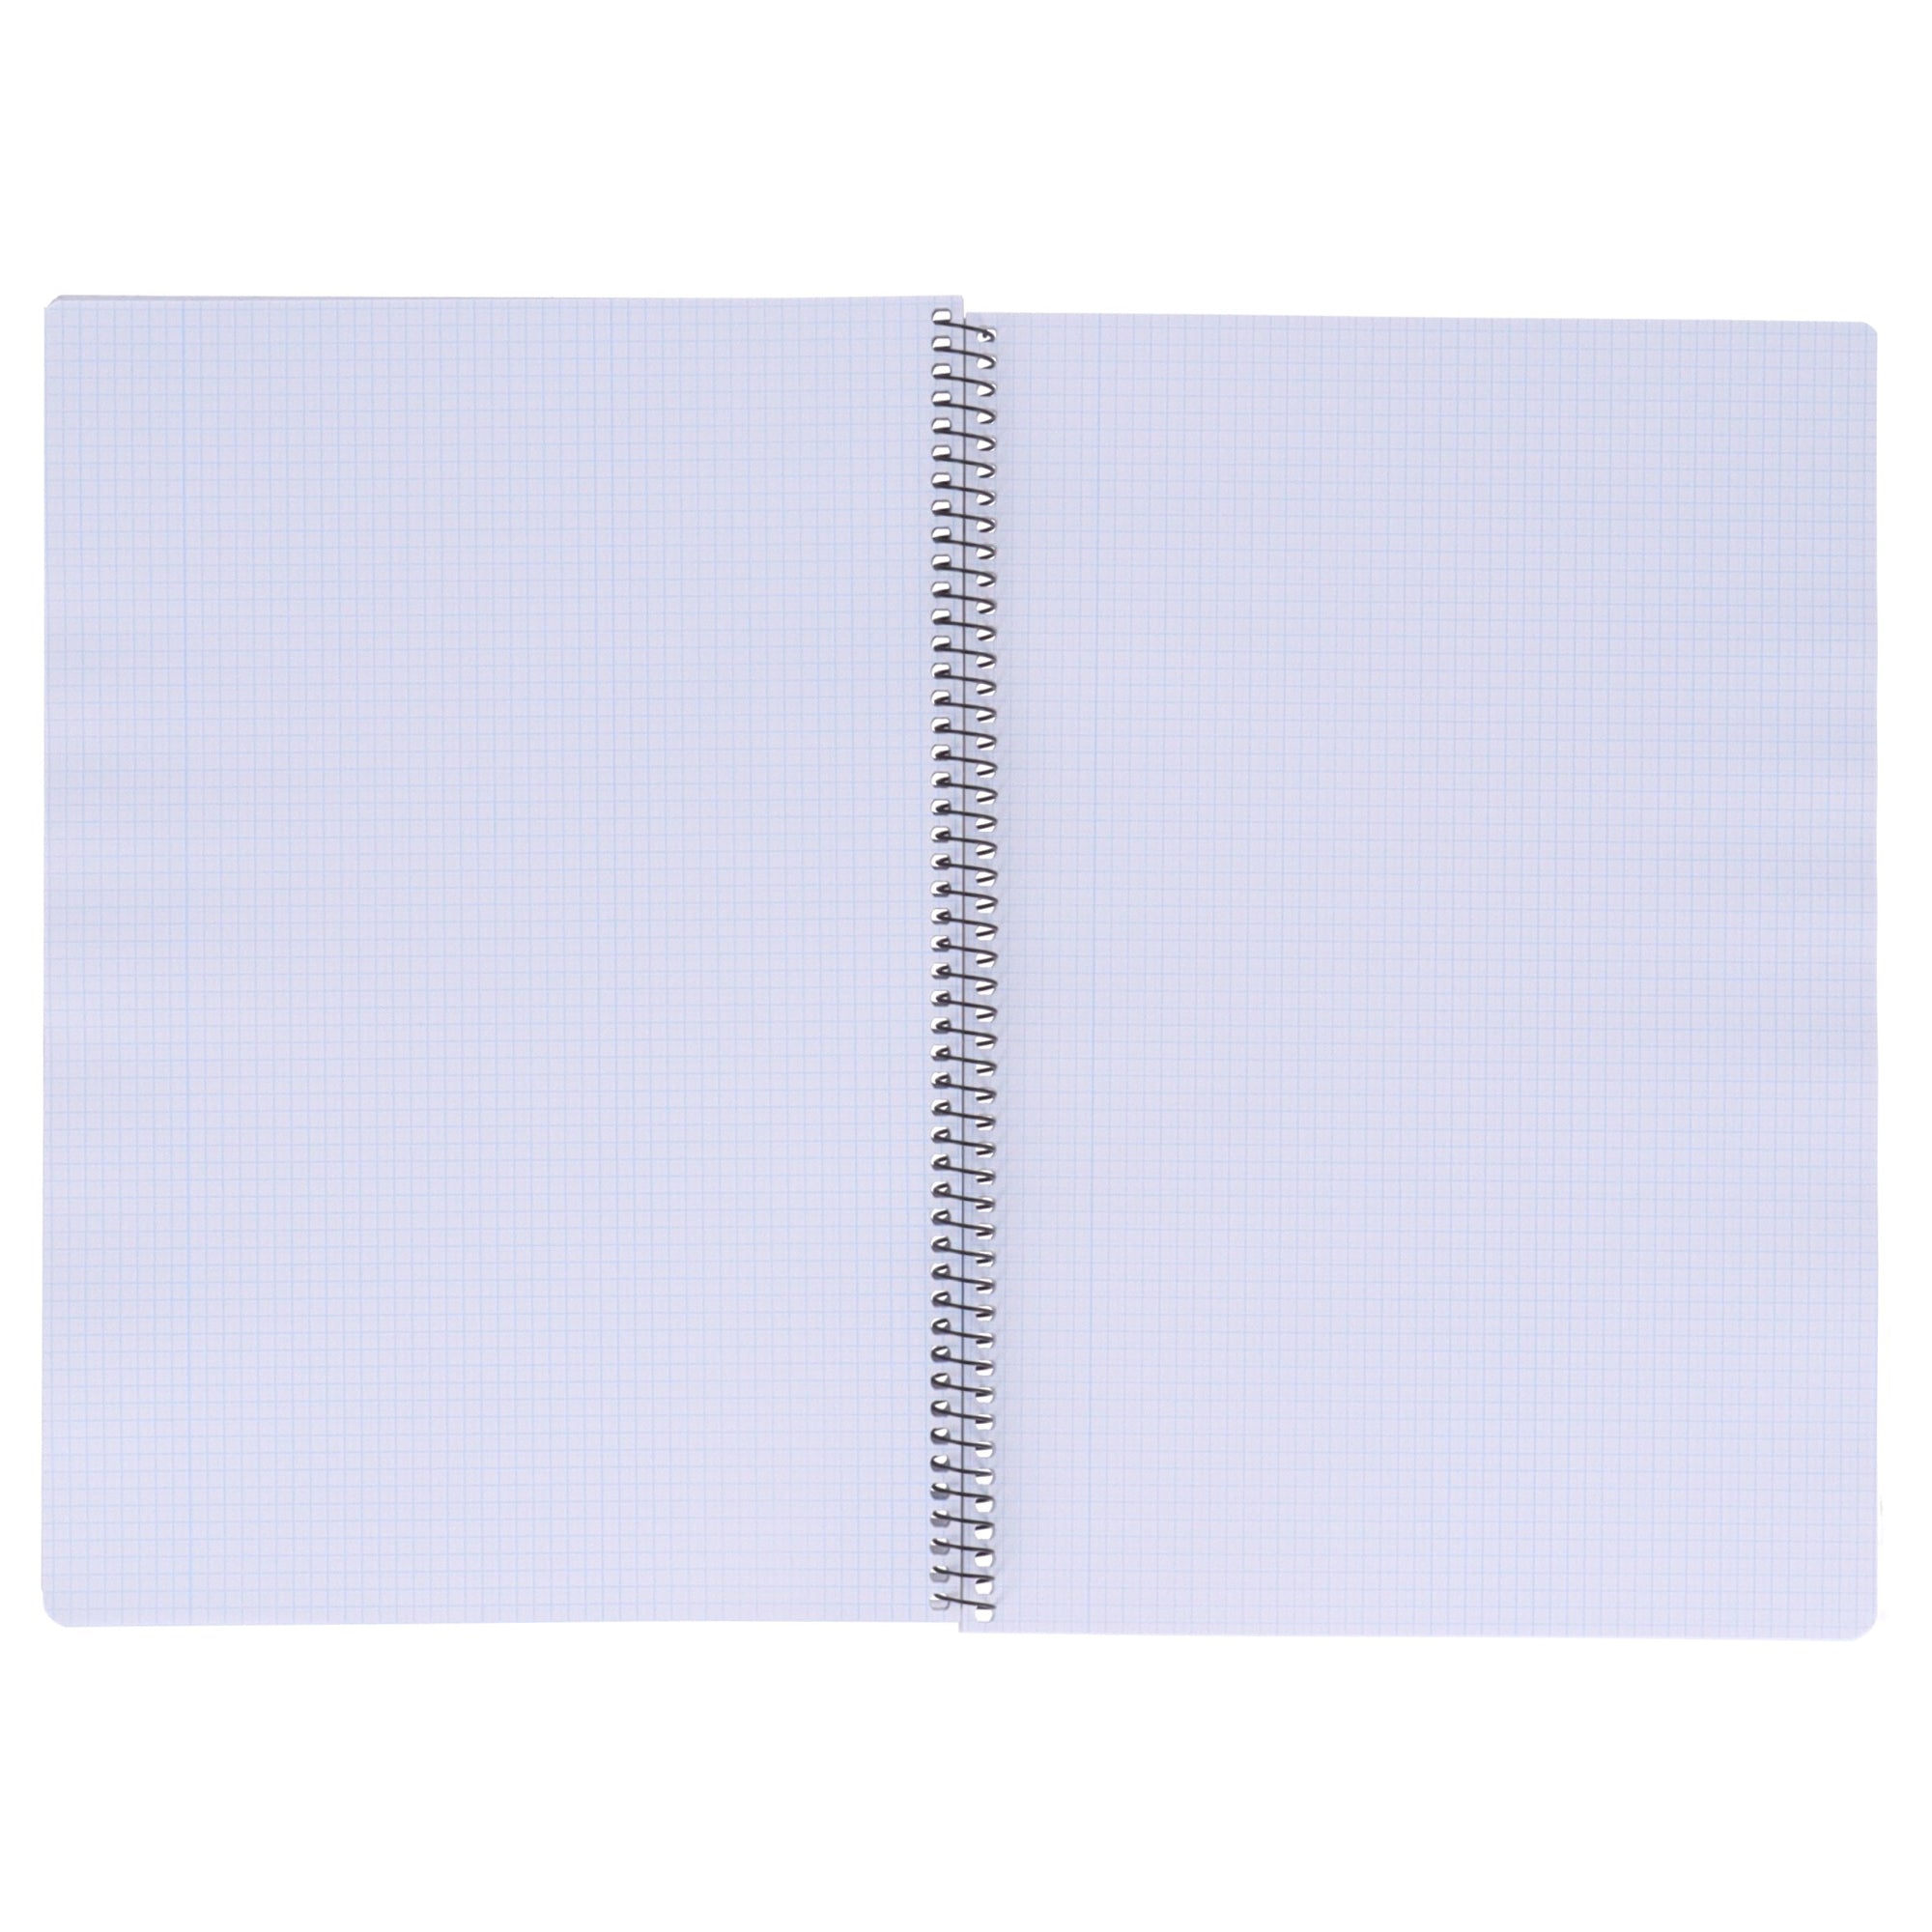 A4 folio size notebook